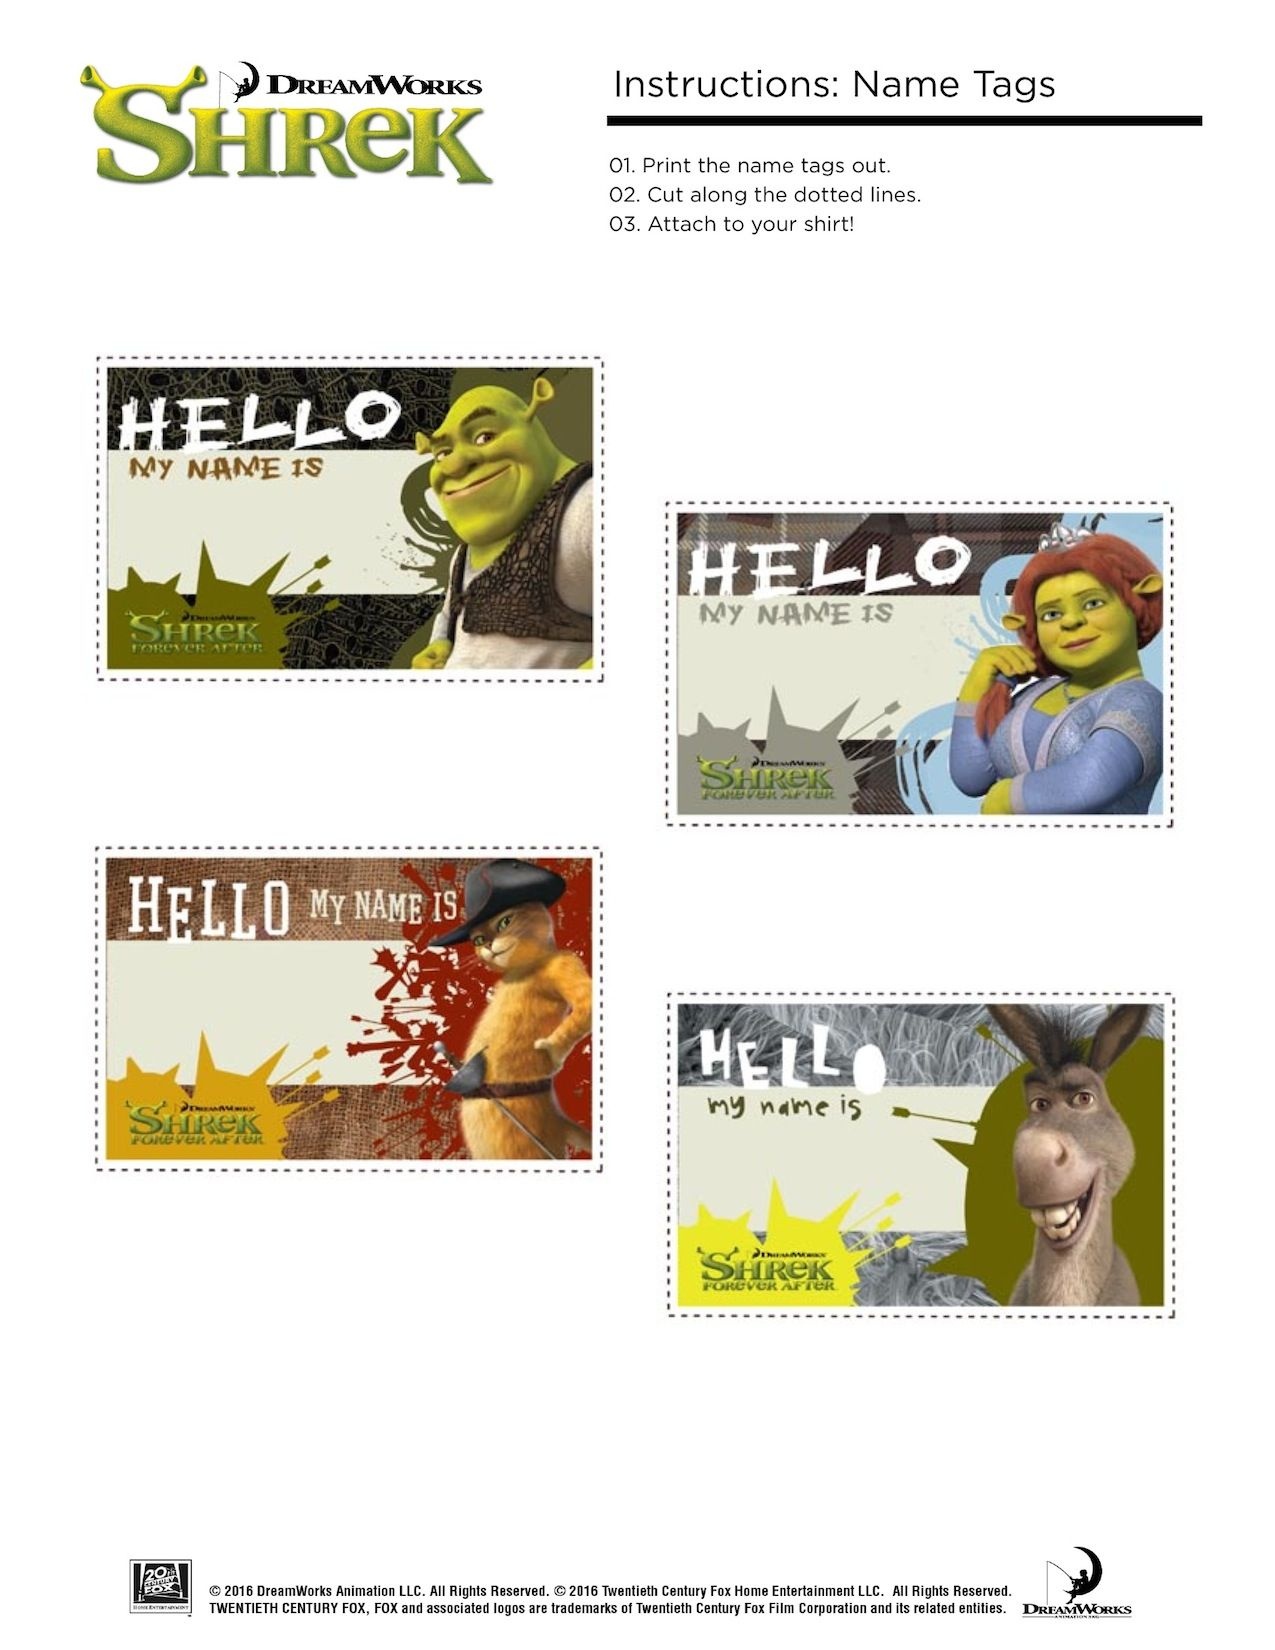 Free Printable Shrek Birthday Party: Invitation, Game, Party Hat - Free Printable Shrek Invitations